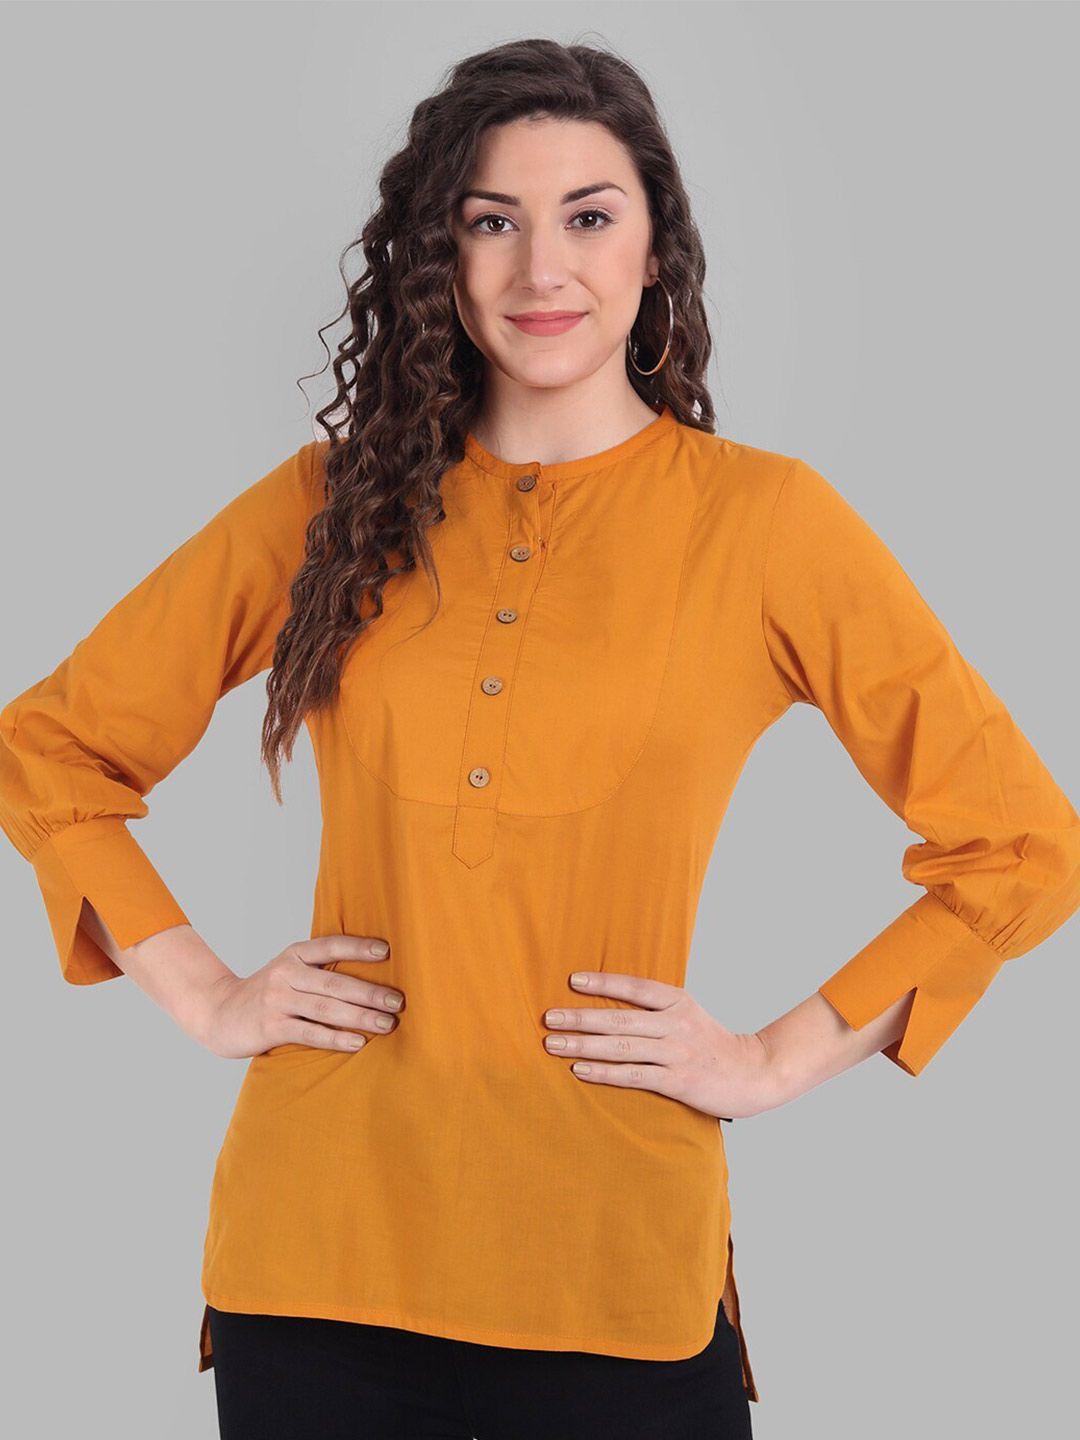 githaan women mustard yellow mandarin collar shirt style top